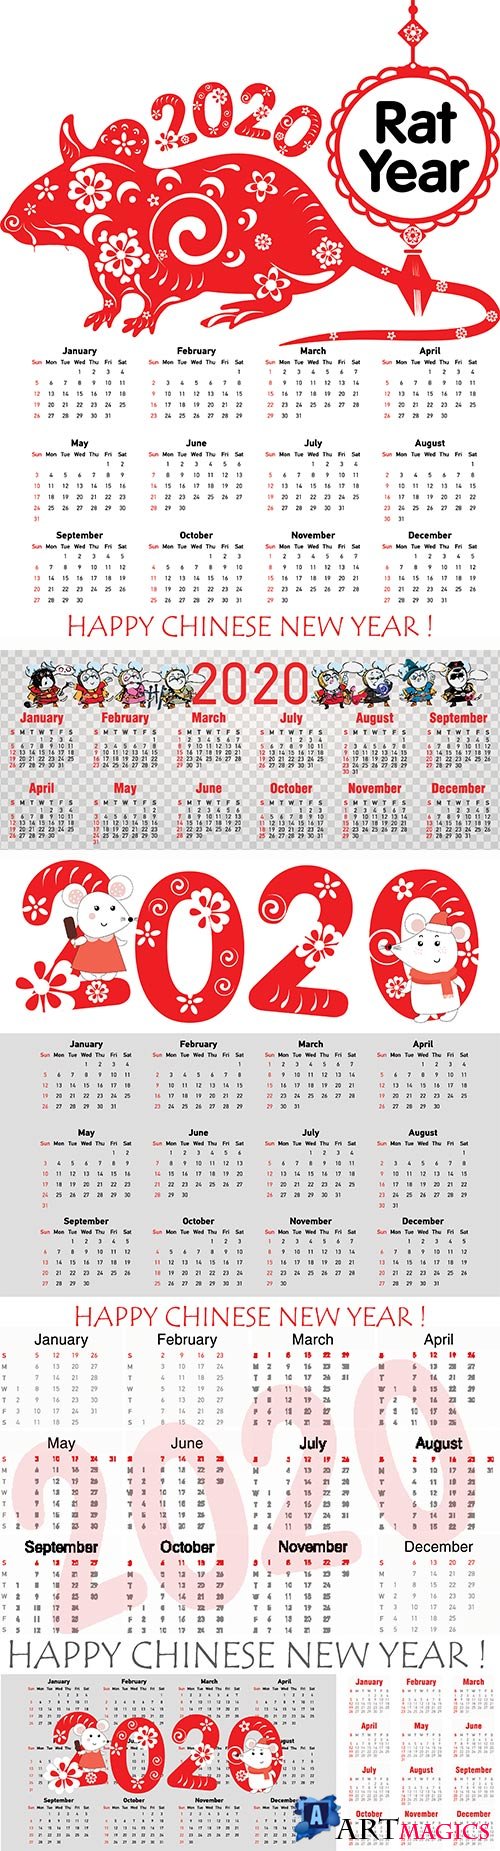 Rat year 2020 vector calendar